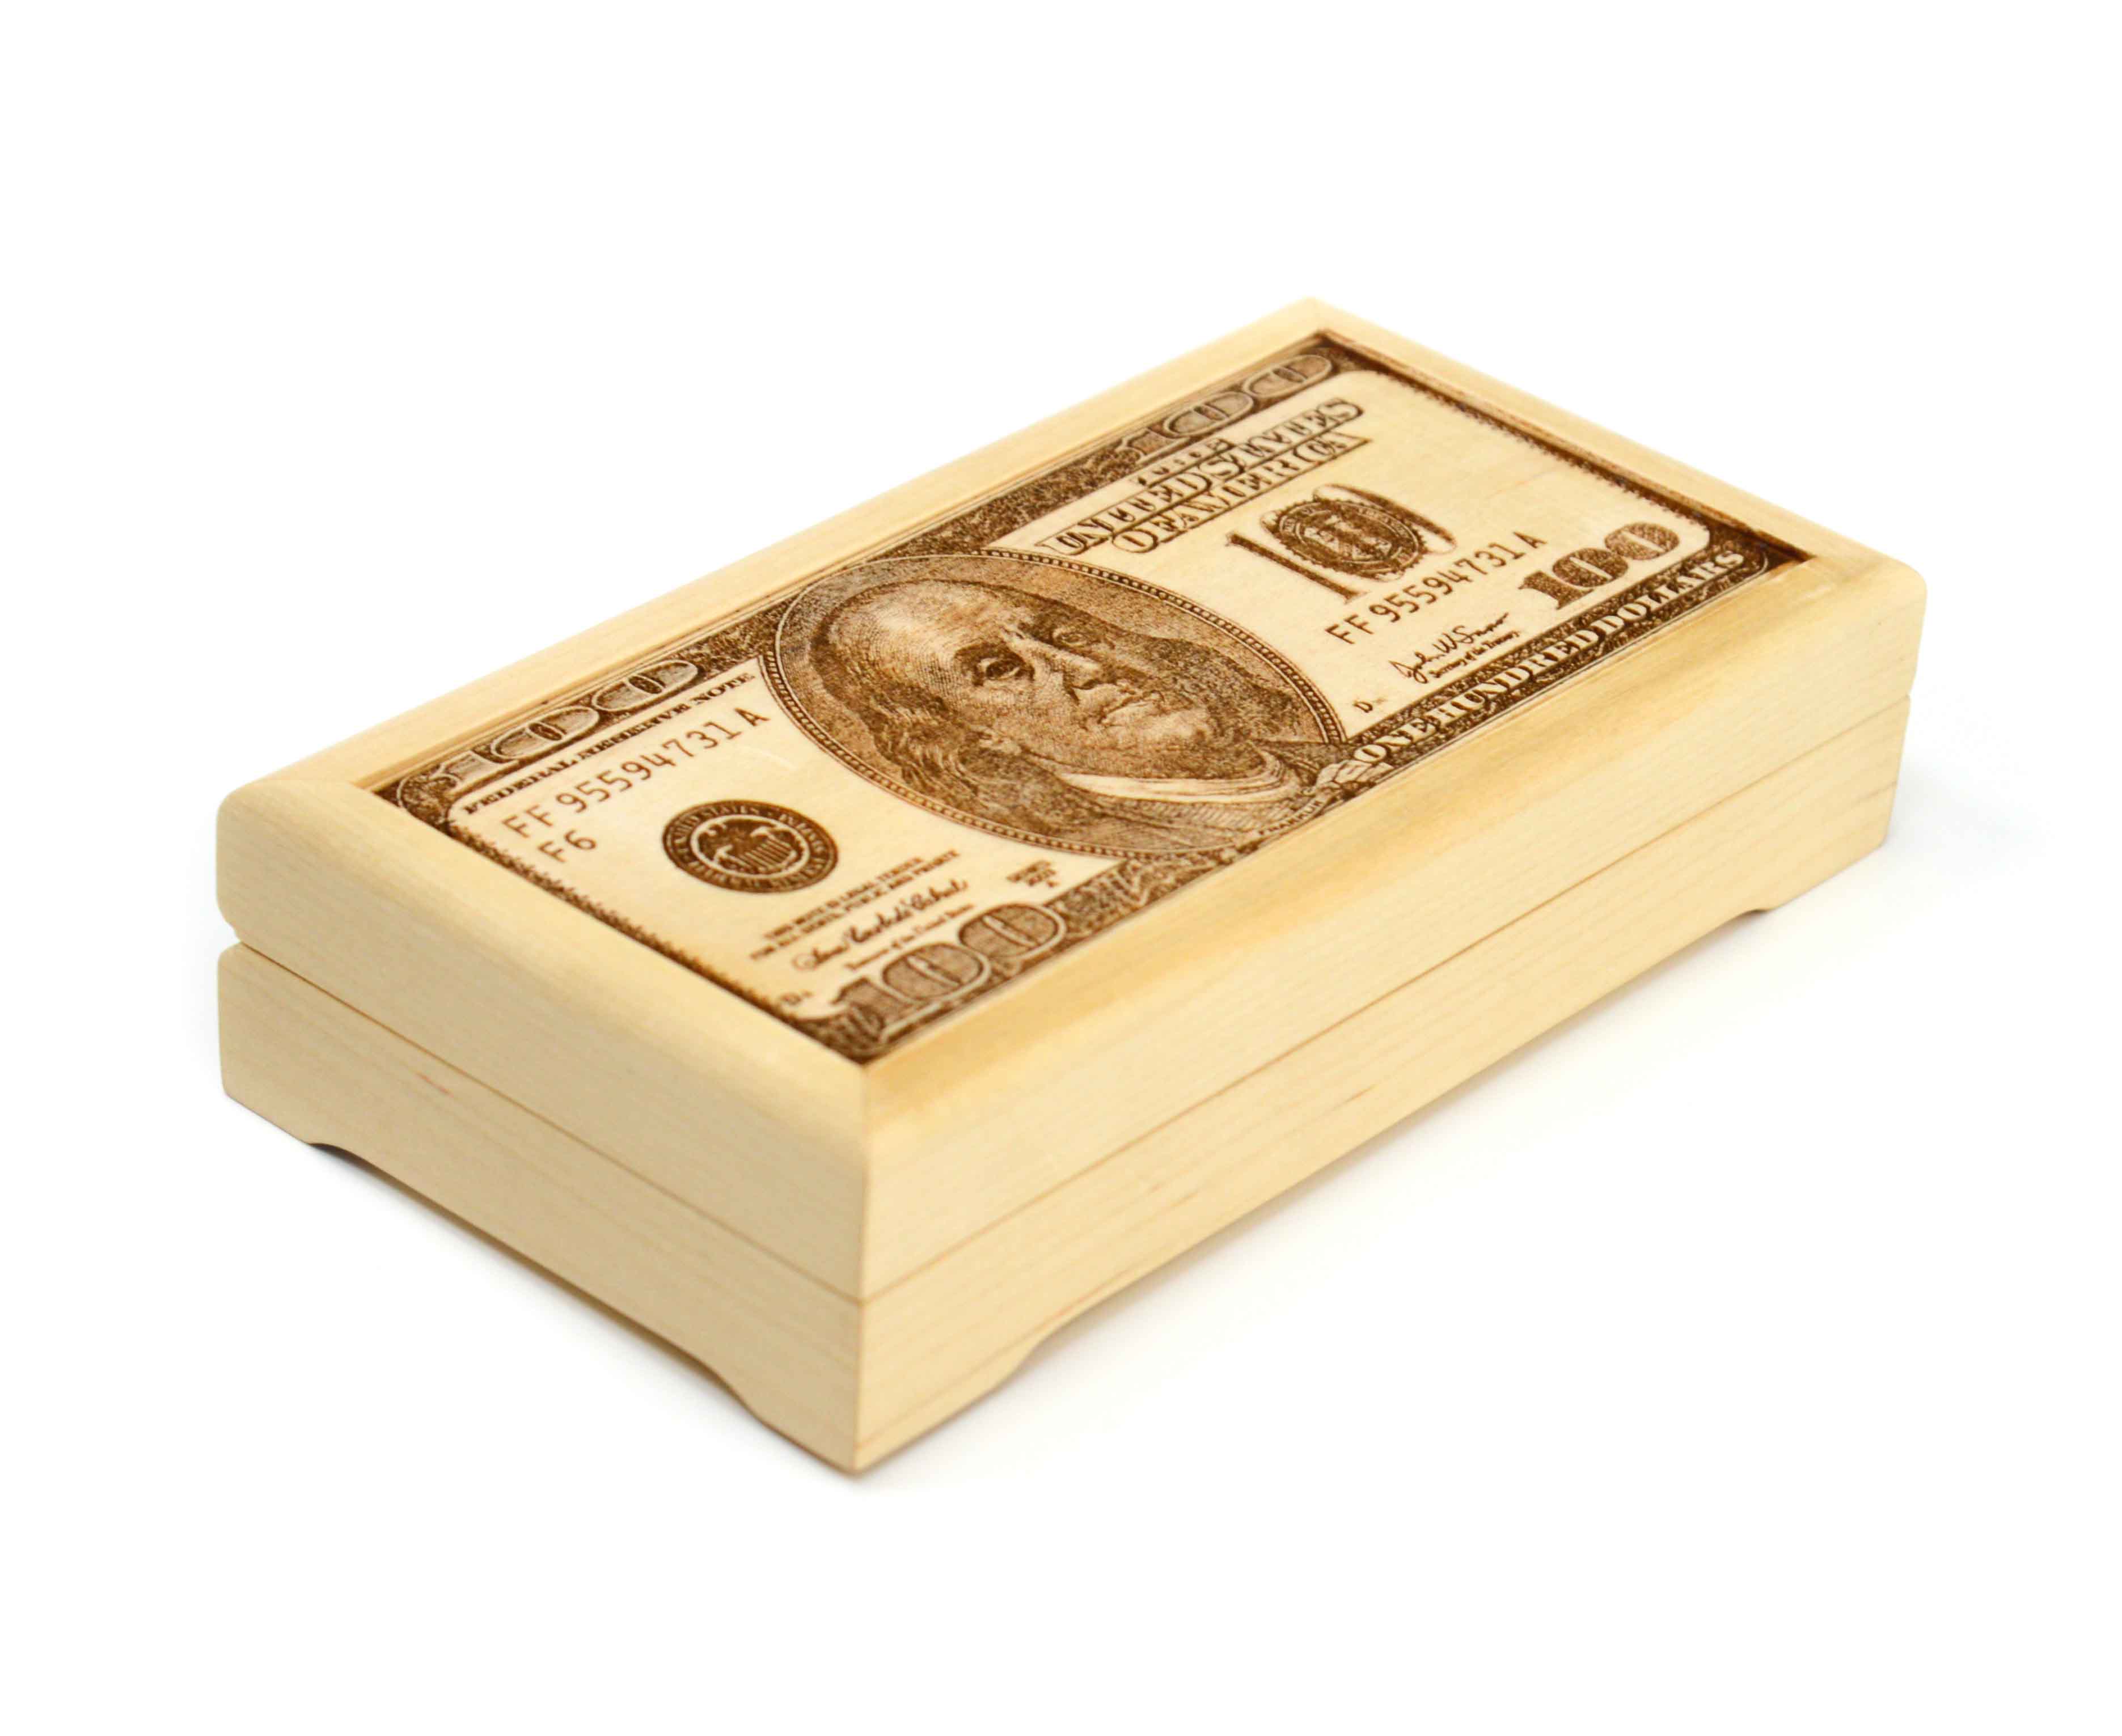 1 money box. Шкатулка для денег к354. Шкатулка для денег из дерева. Шкатулка деревянная для денег купюр. Шкатулка для купюр из дерева.